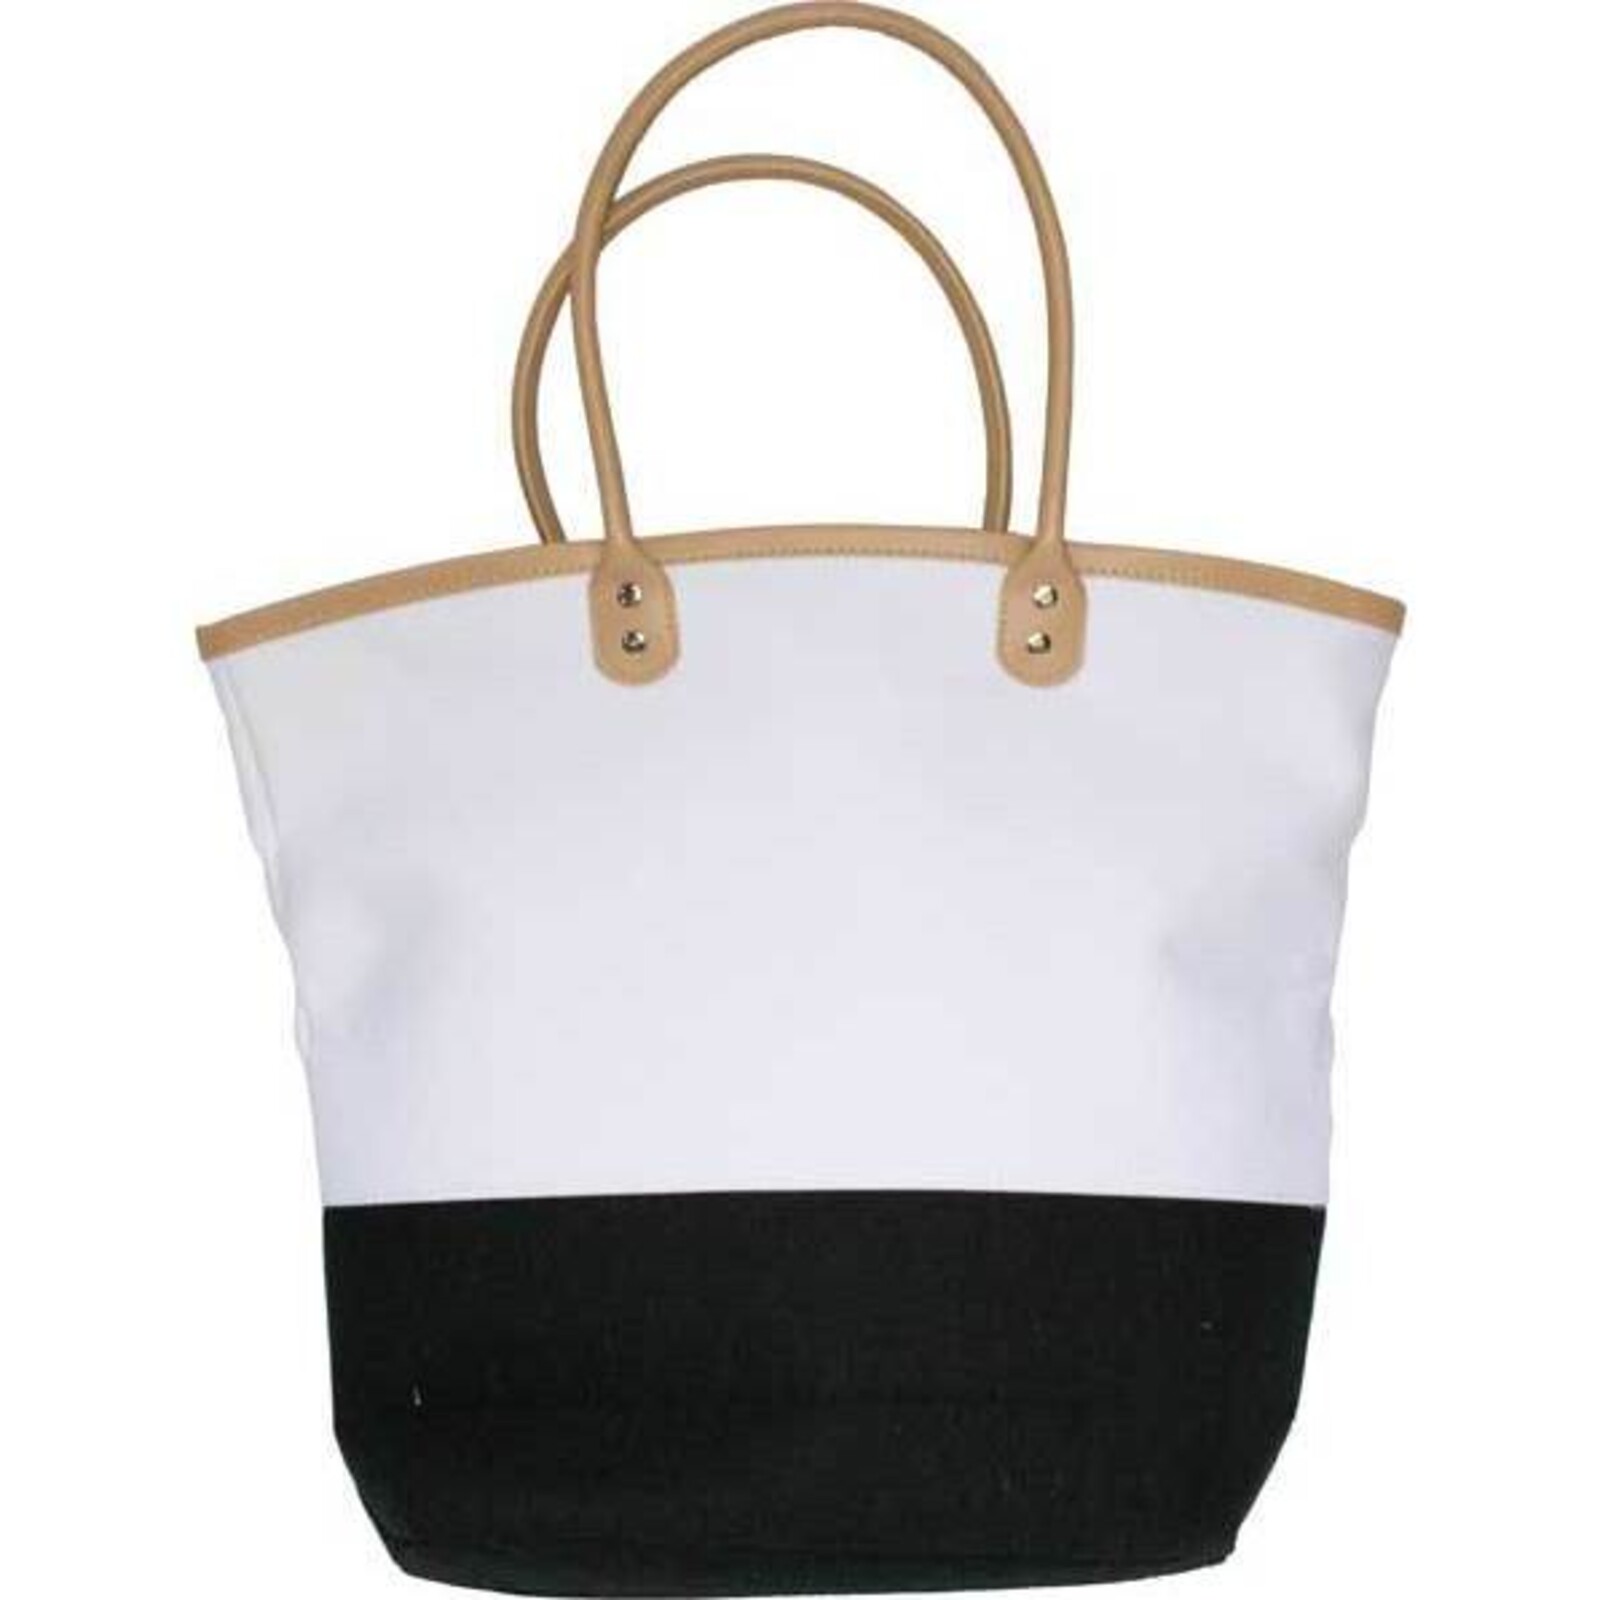 Two-Tone Hamptons Style Bag - Black